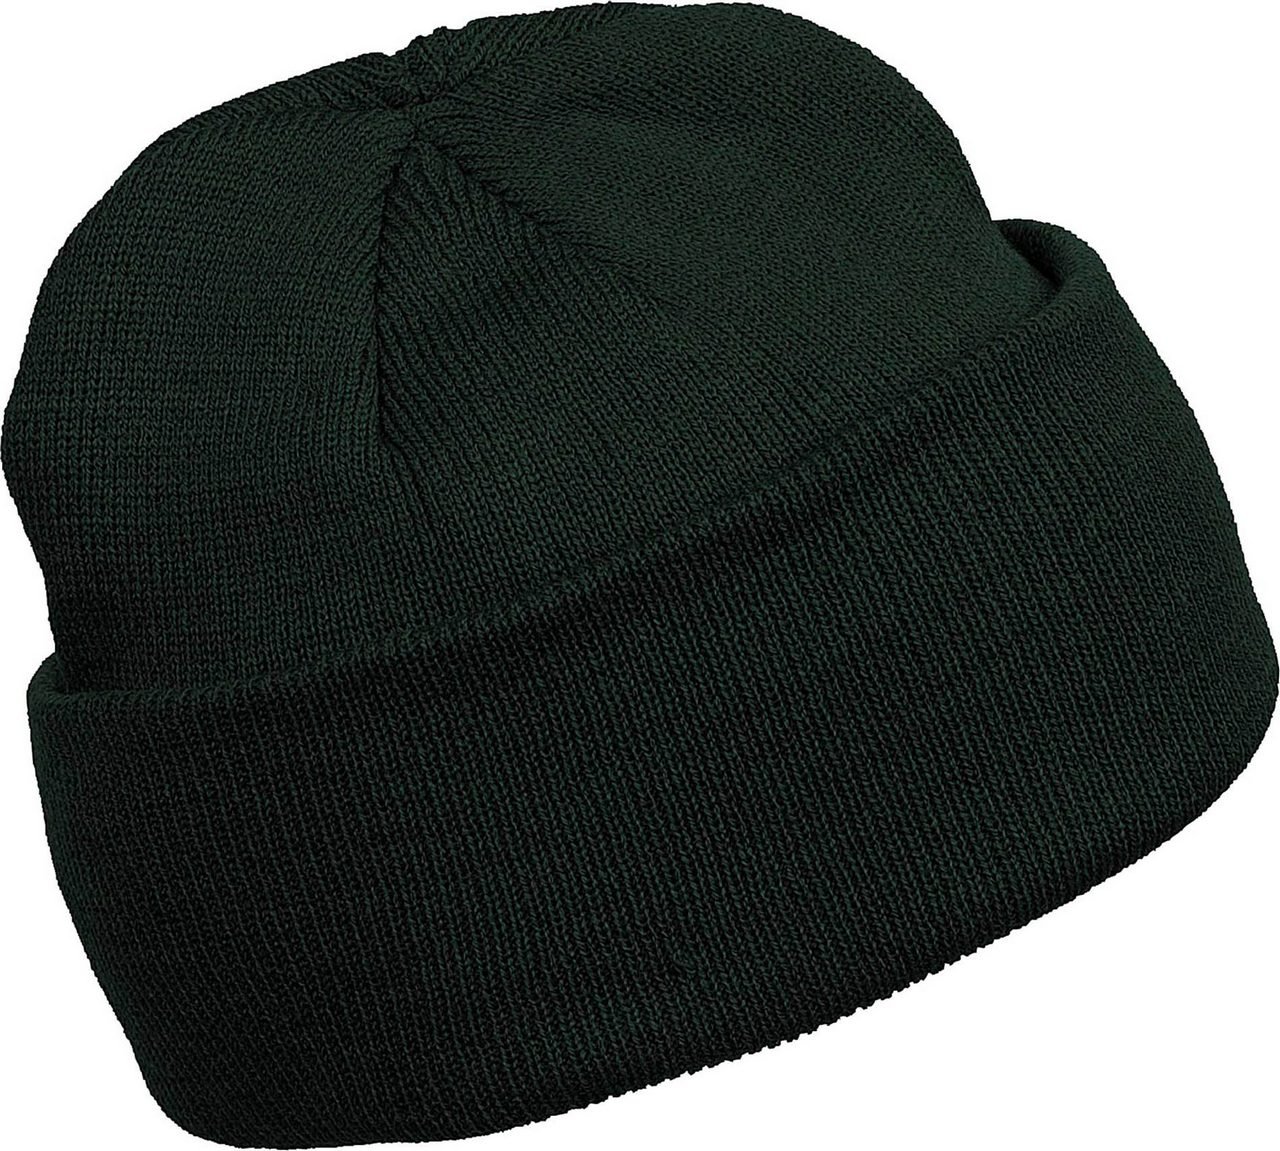  Caciula Knittedknitted-hat-3081.jpg